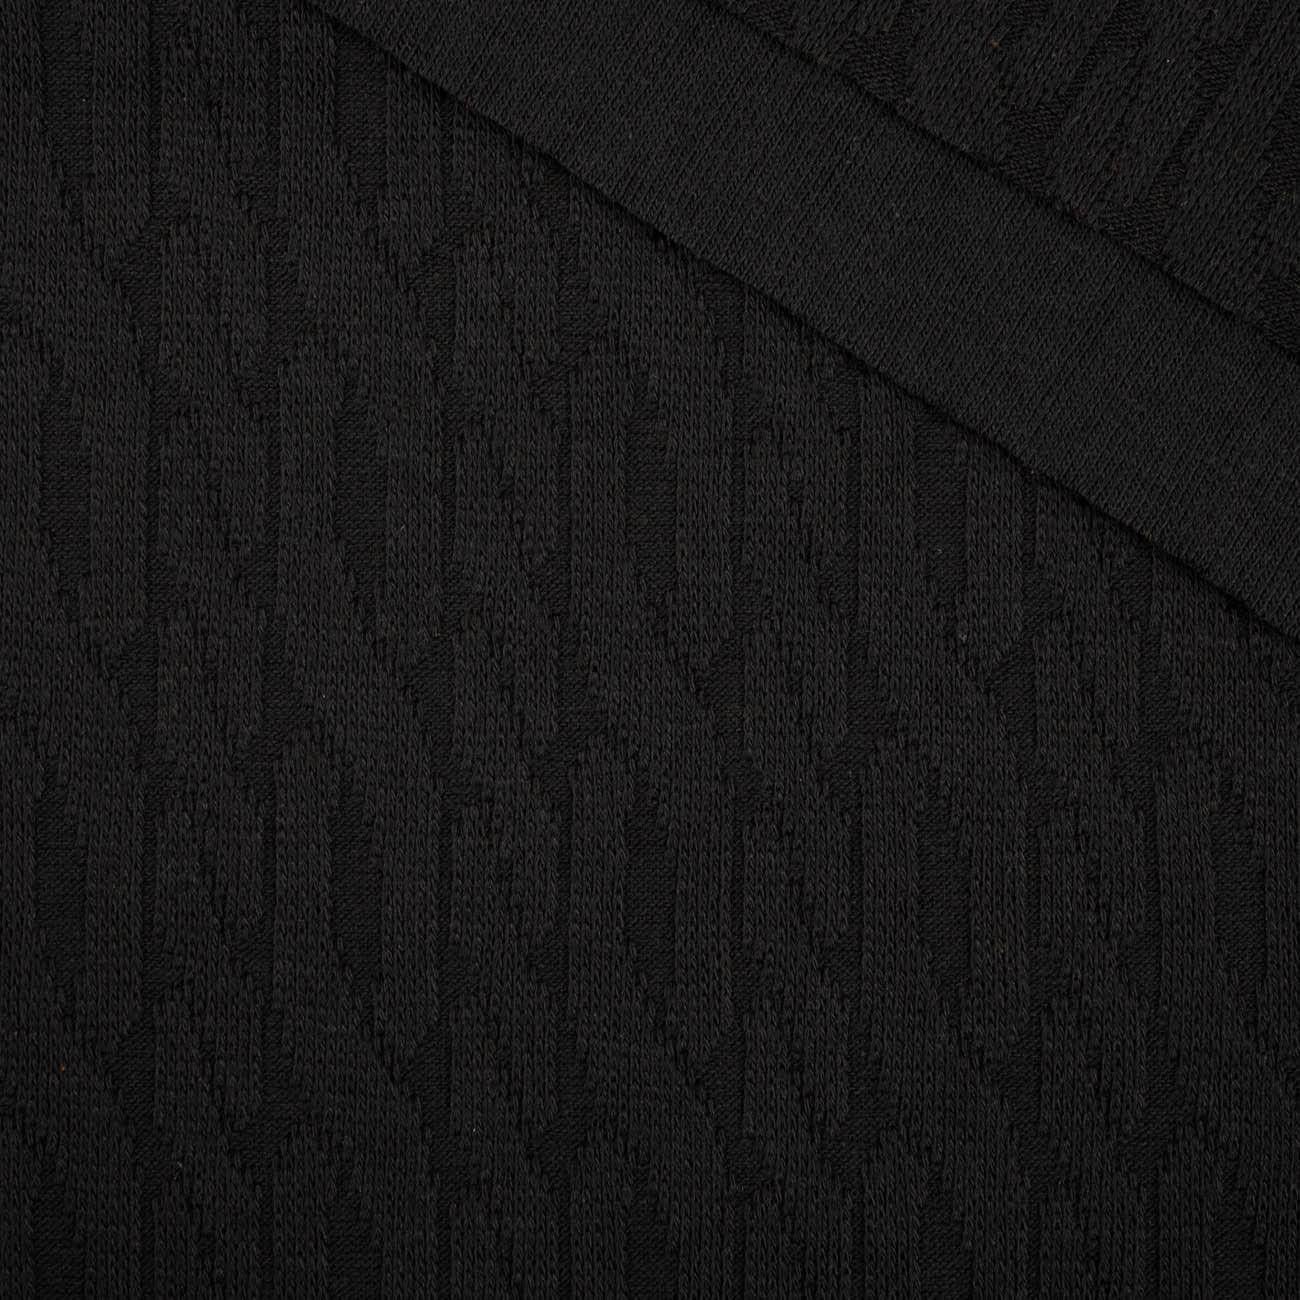 Black - Sweater knit fabric 420g - Braid